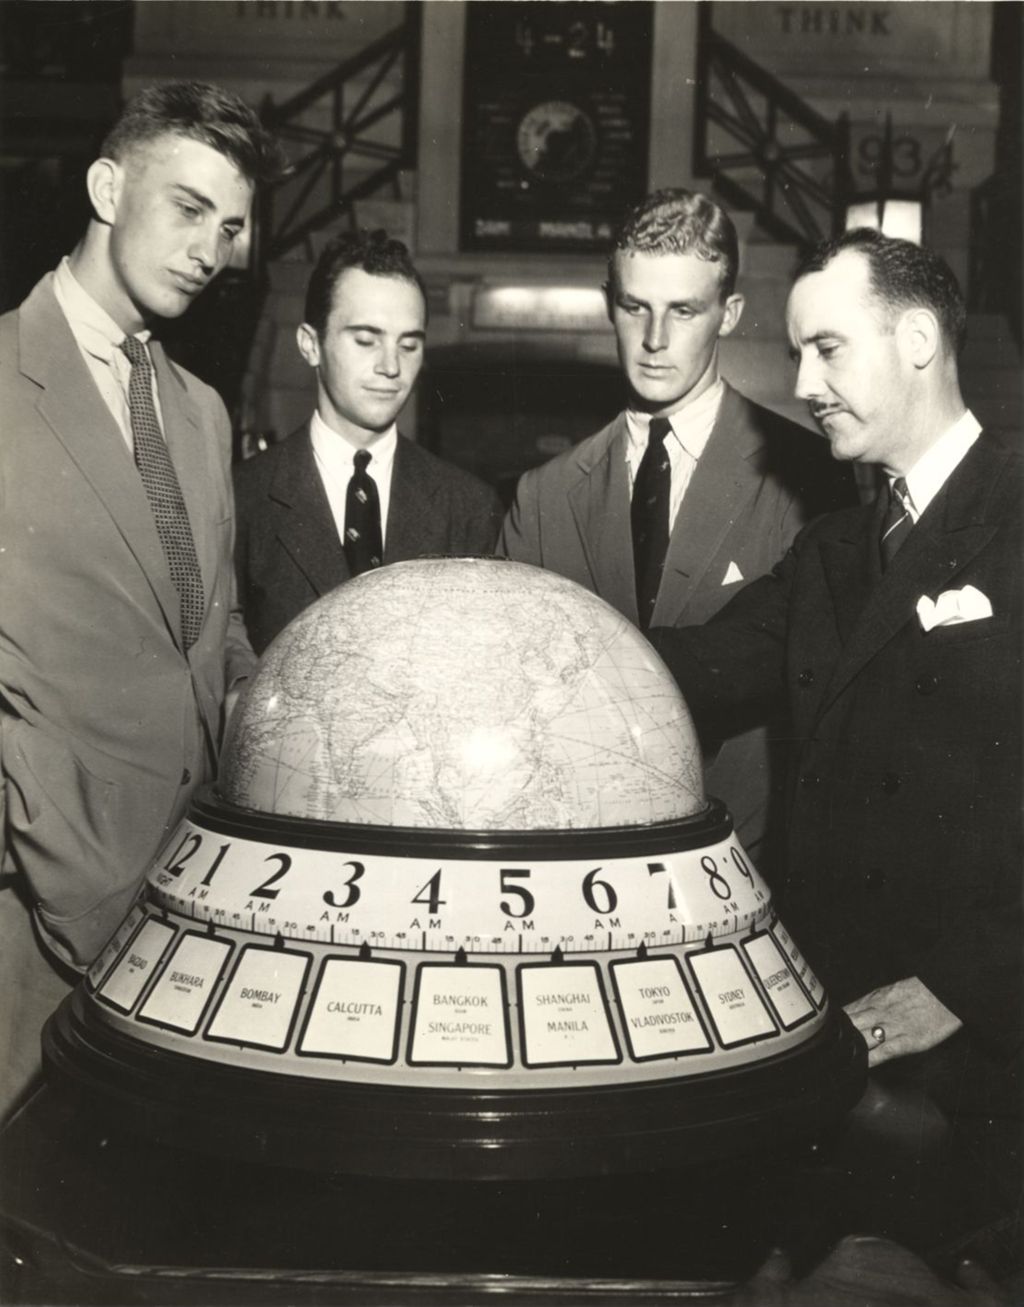 Franklin D. Roosevelt, Jr. visits the International World Clock at the New World's Fair